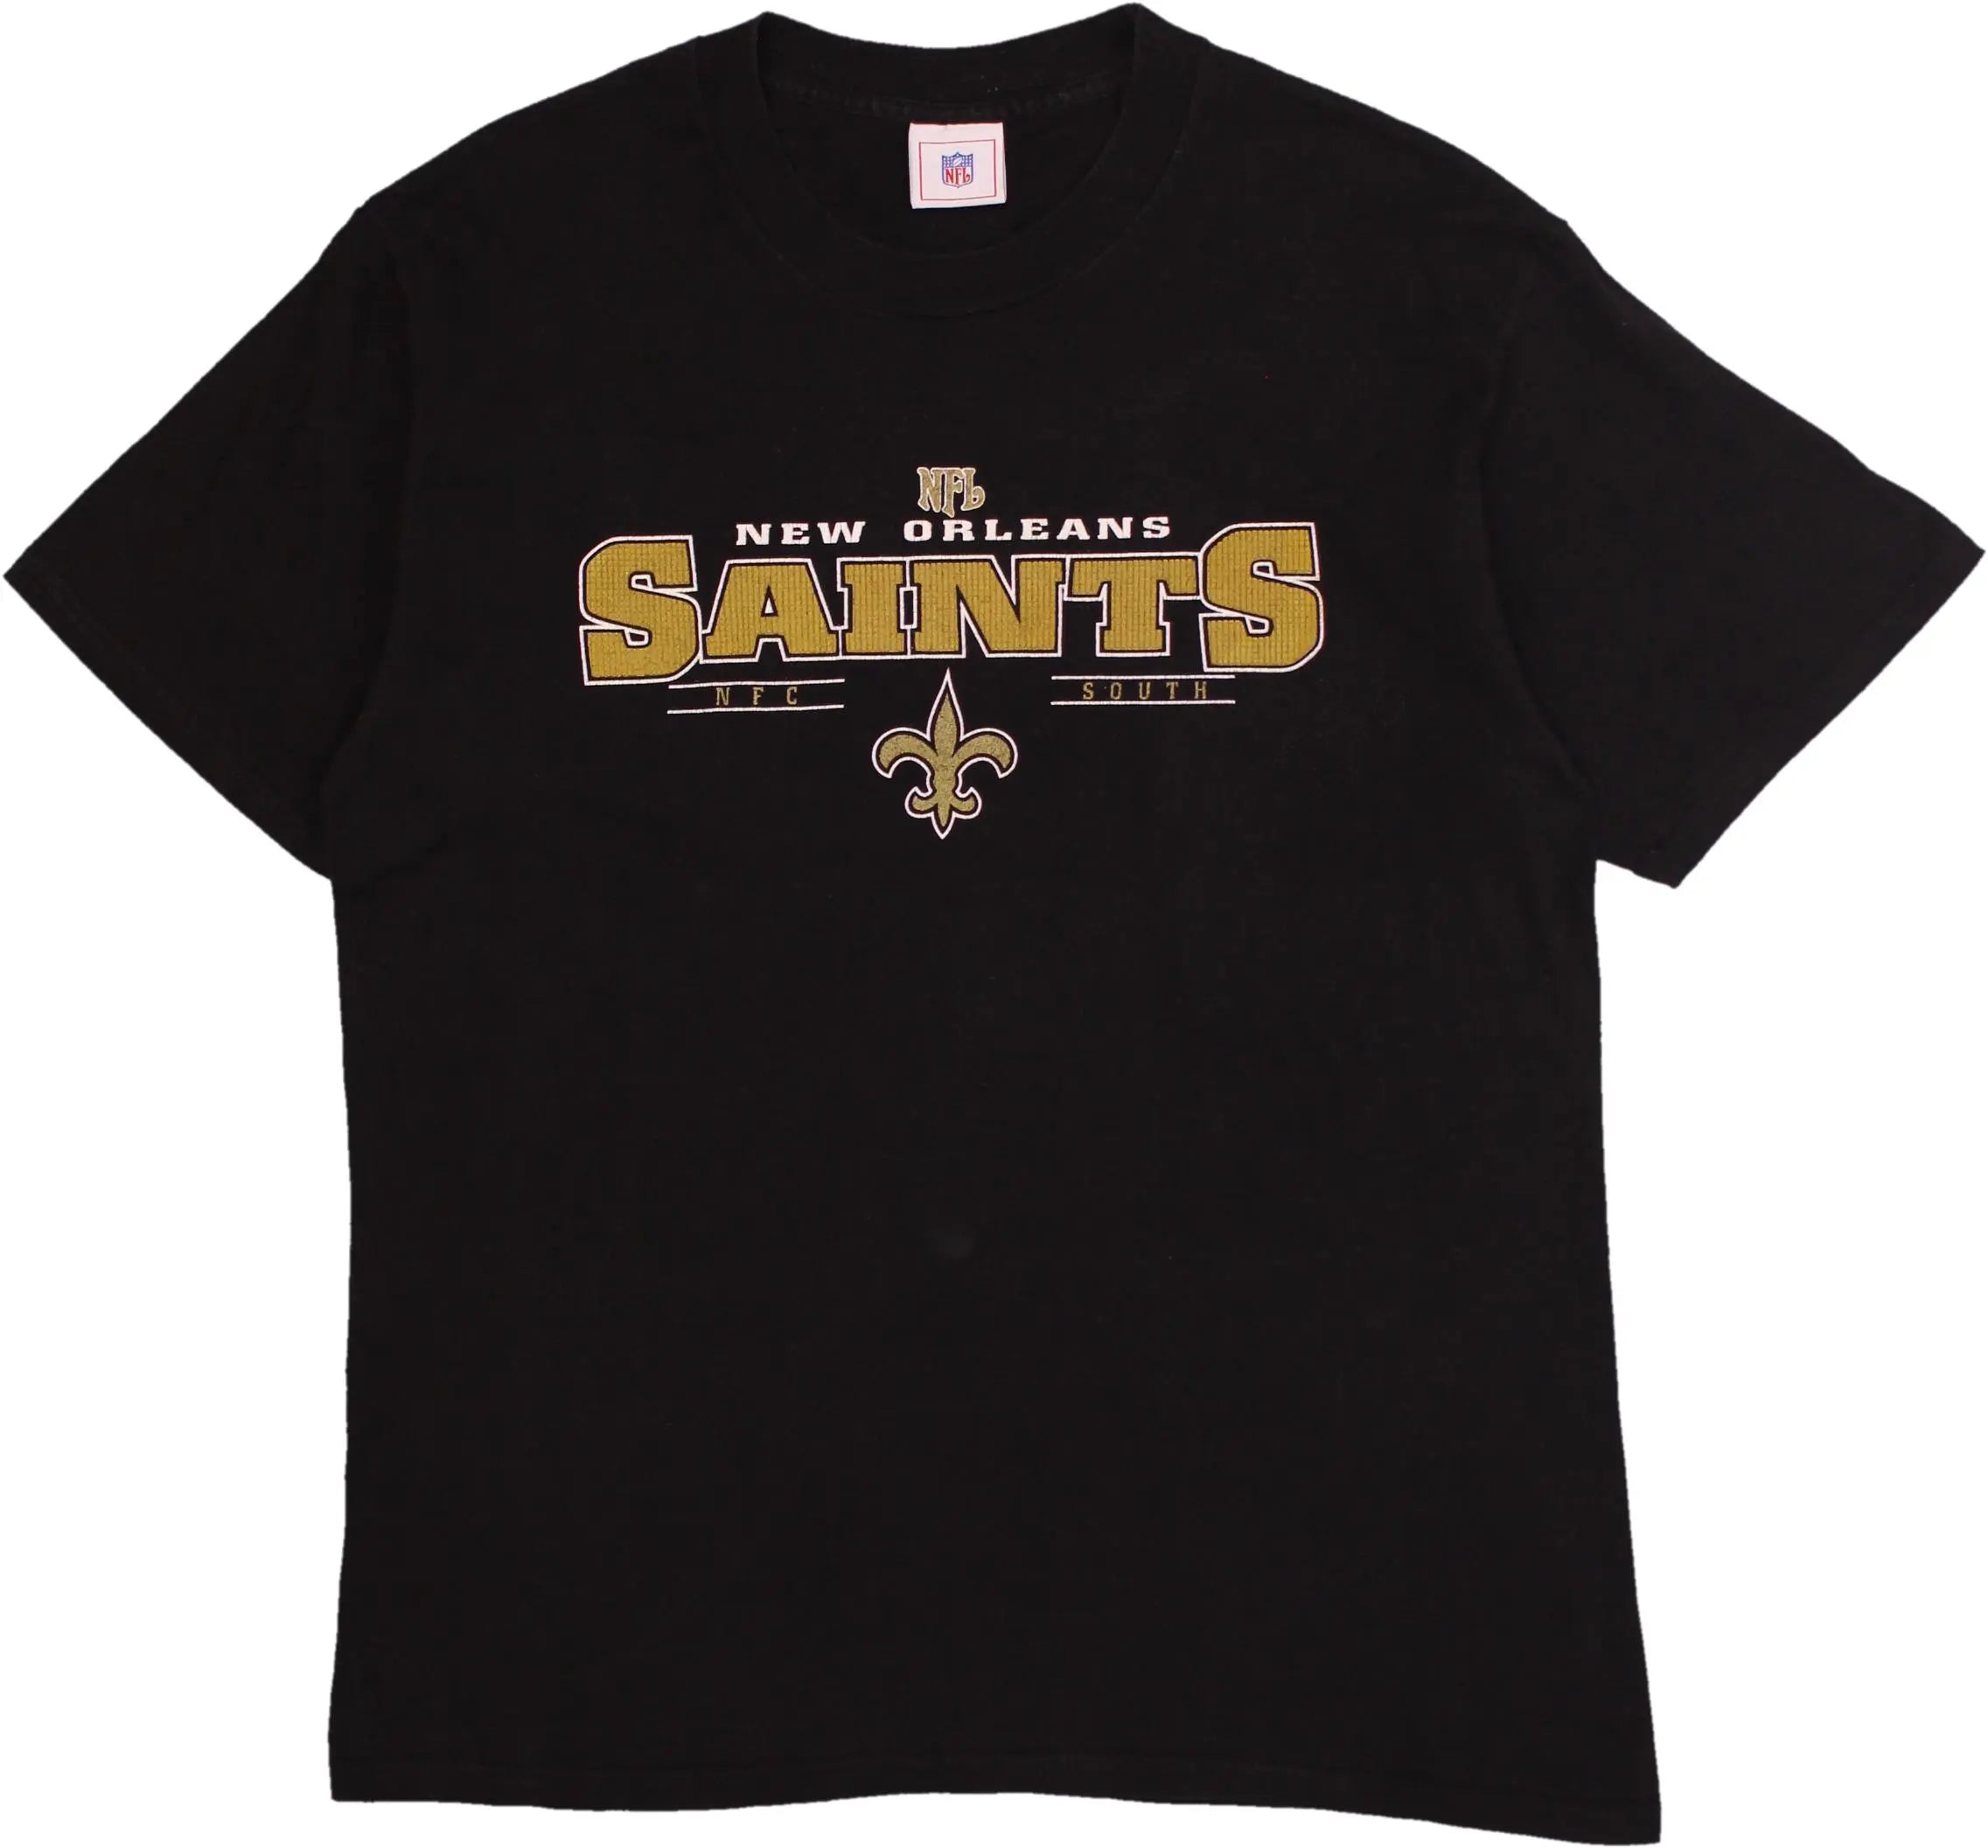 NFL - NFL New Orleans Saints T-shirt- ThriftTale.com - Vintage and second handclothing